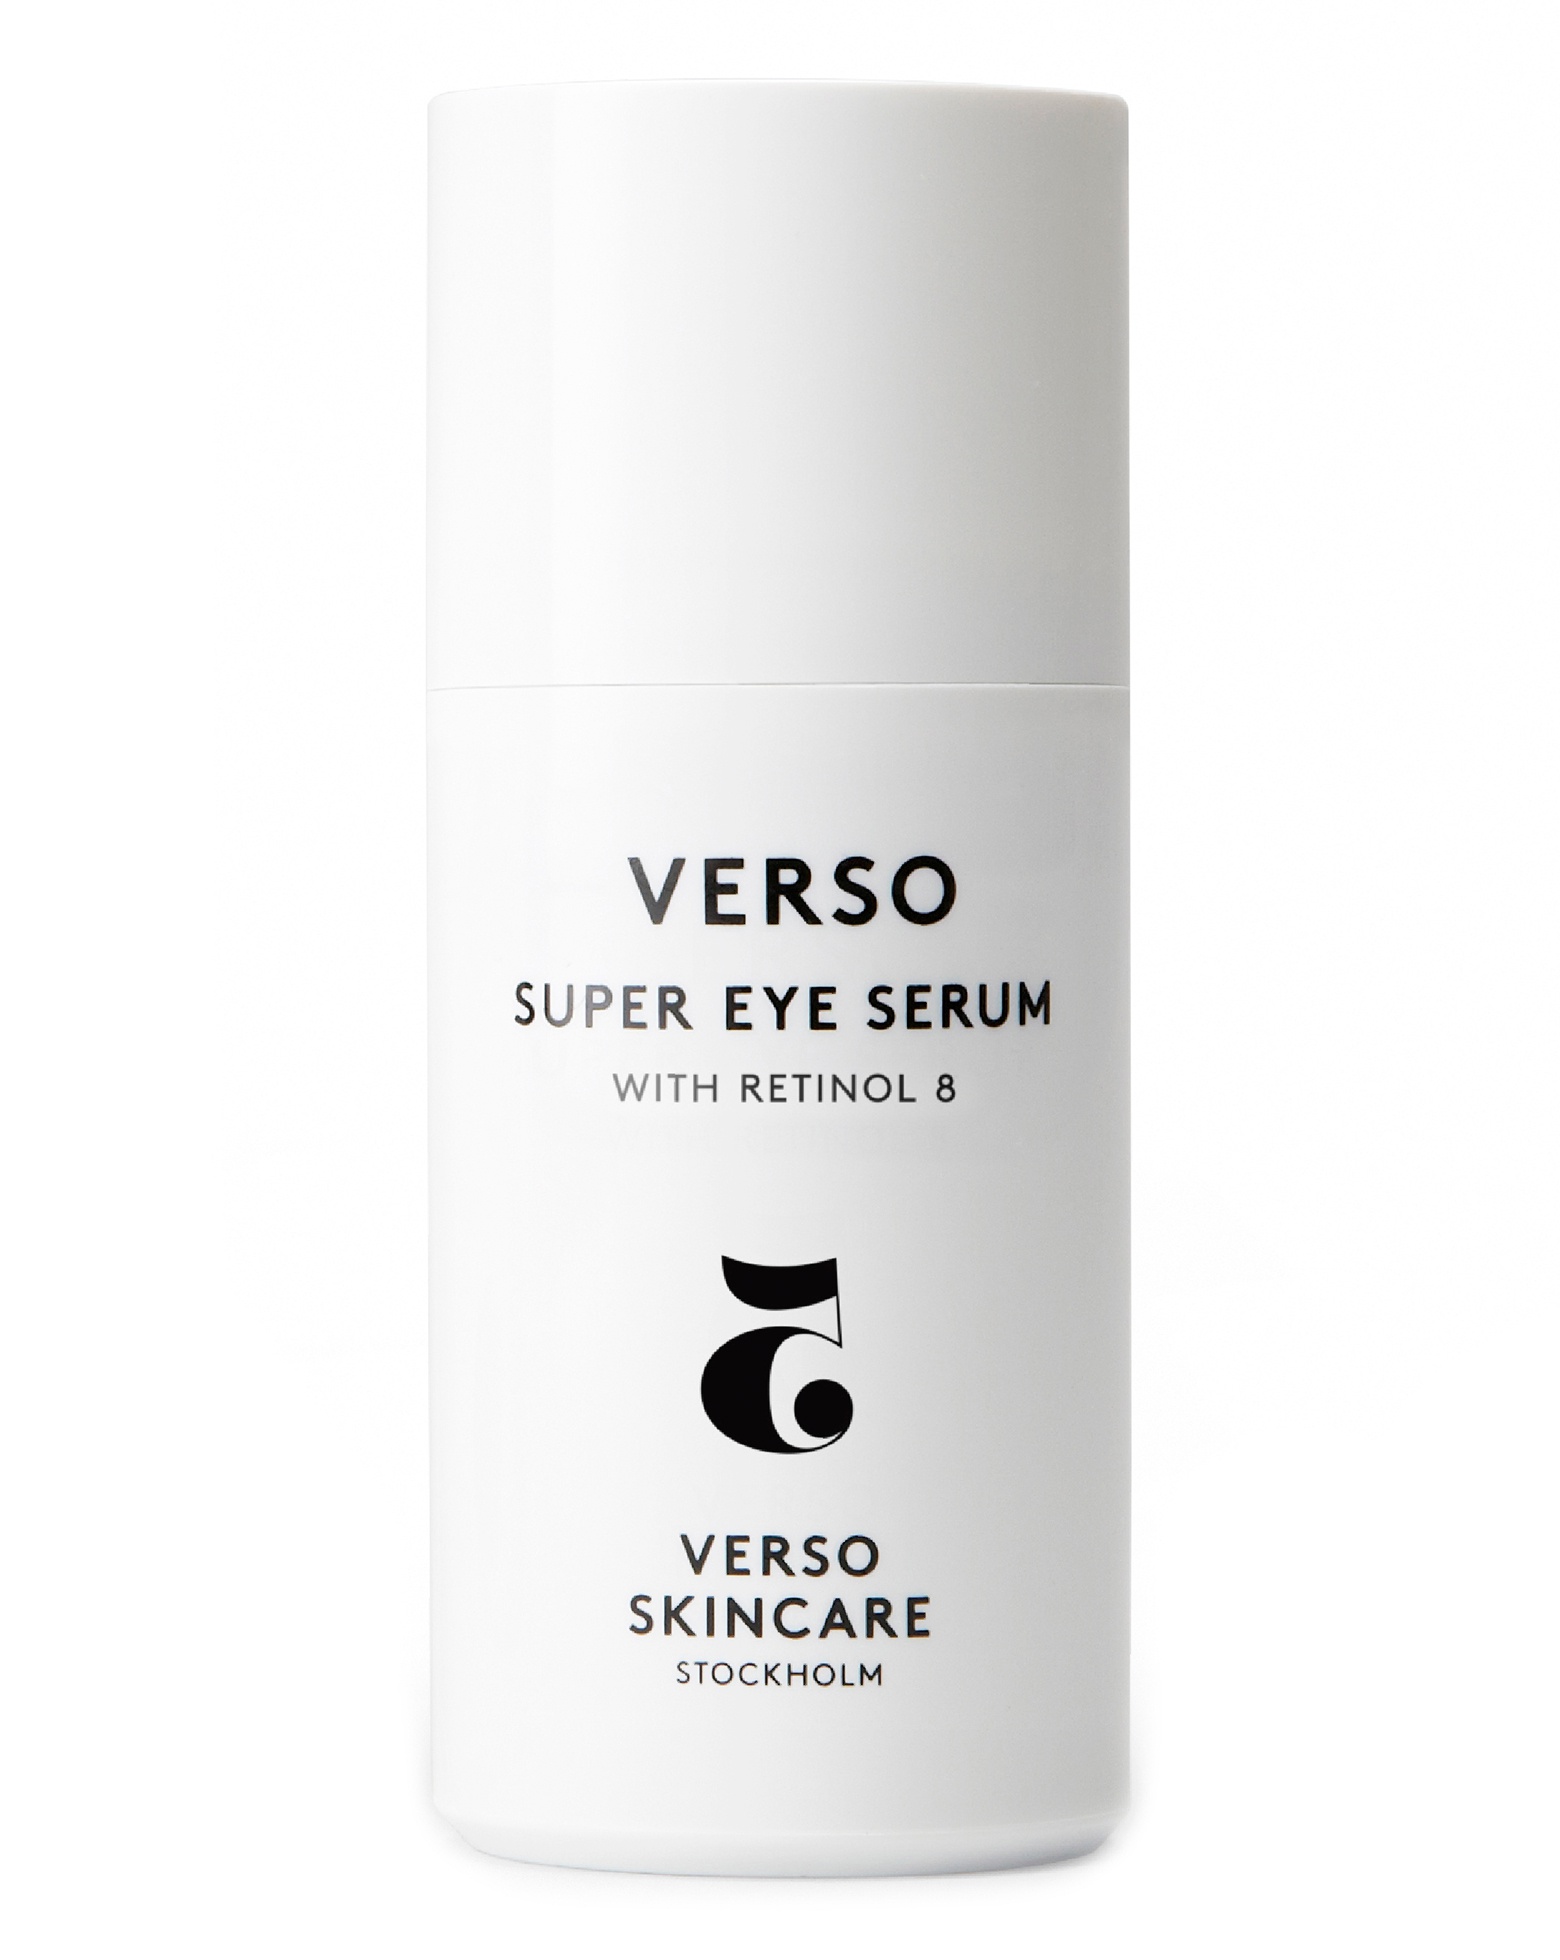 Verso Super Eye Serum